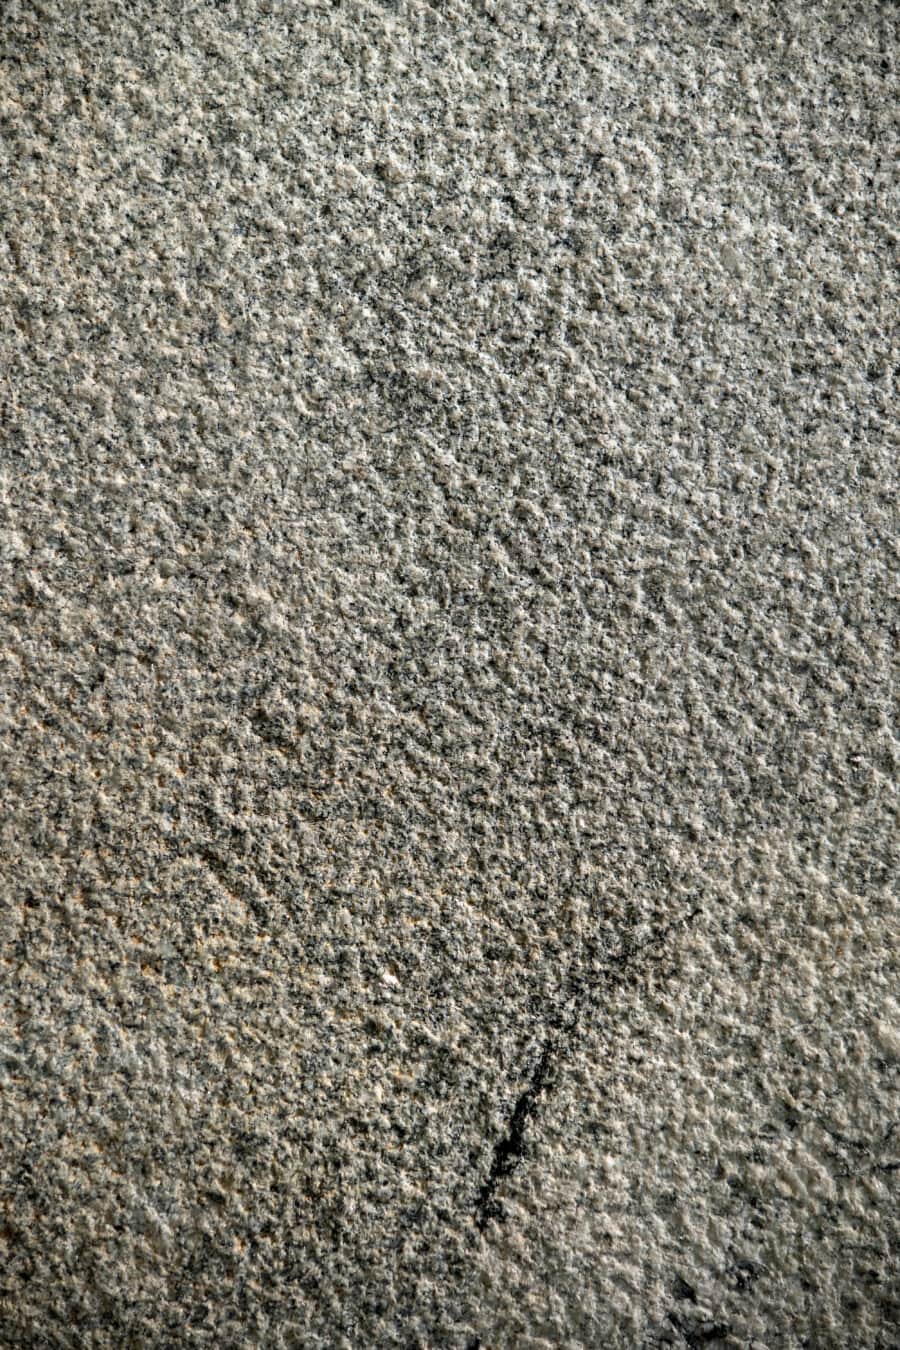 abu-abu, granit, batu, tekstur, permukaan, bahan, pola, kasar, beton, abu-abu